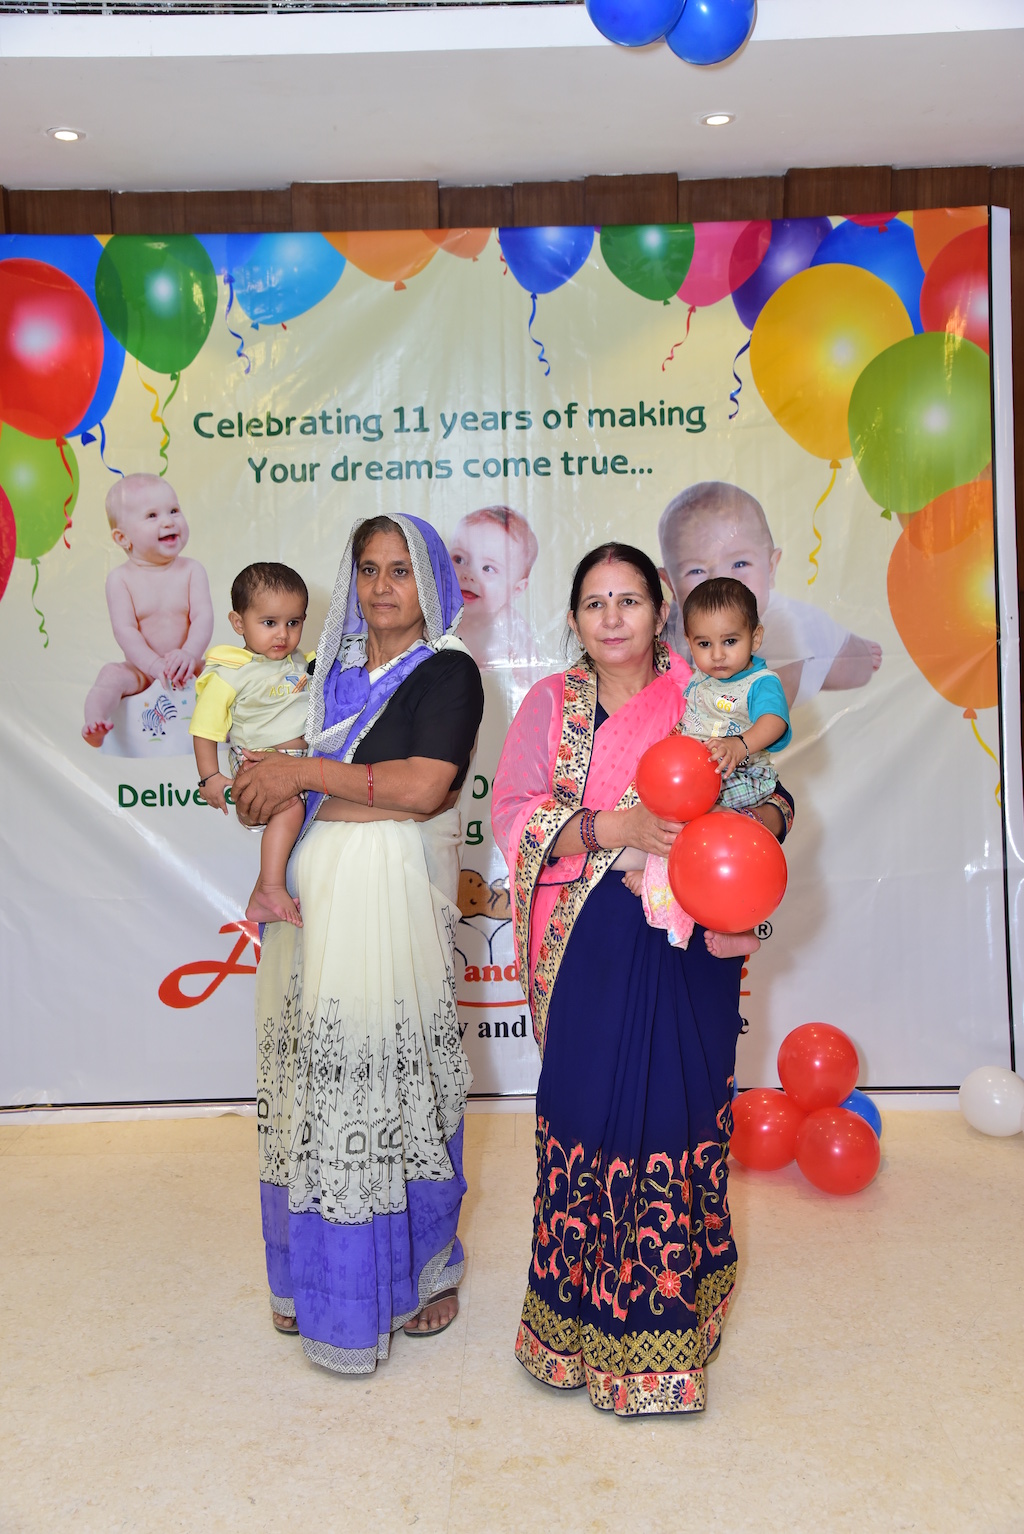 Best IVF Specialist Noida, Test Tube Baby Center in Noida, Infertility Treatment in Noida, IVF Centre in Noida, Fertility Centre in Noida, IVF Doctor in Noida, IVF Fertility Centre in Noida